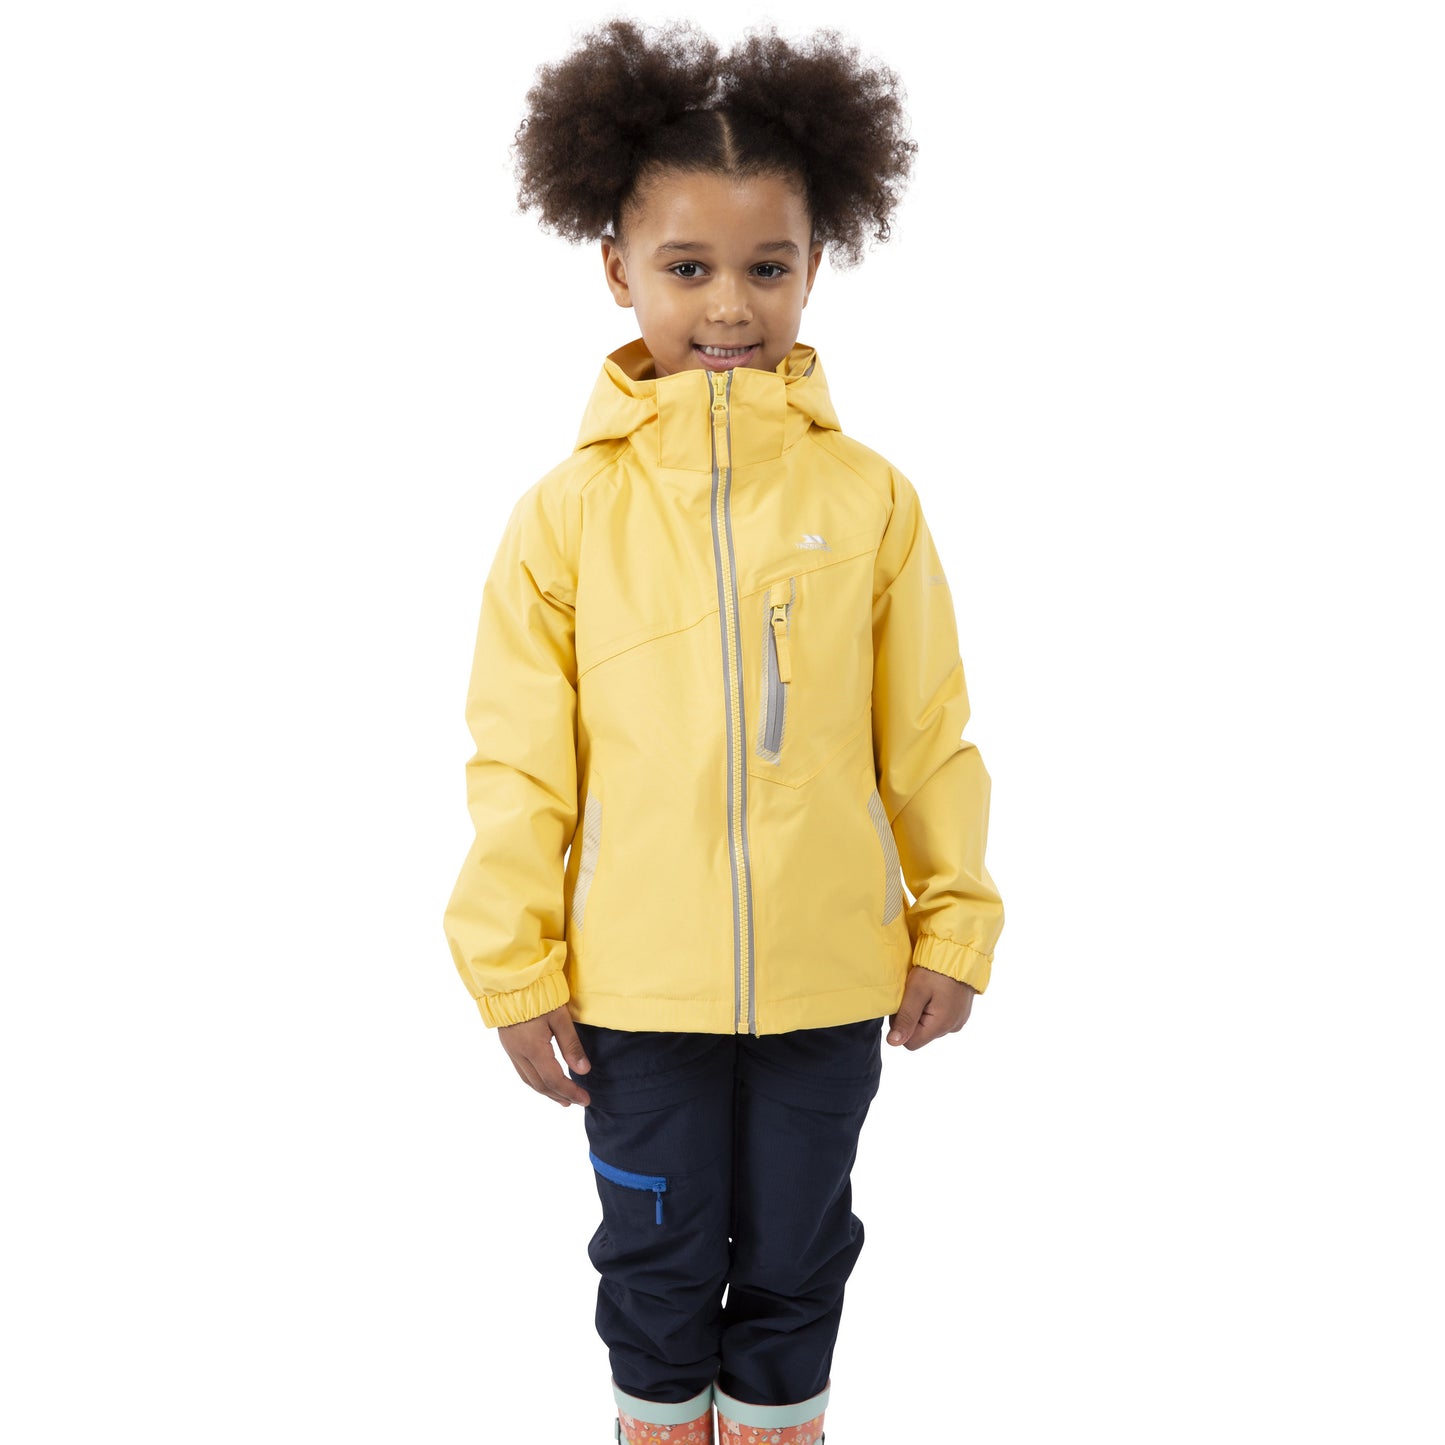 Elite Girls' Waterproof Rain Jacket in Pale Lemon